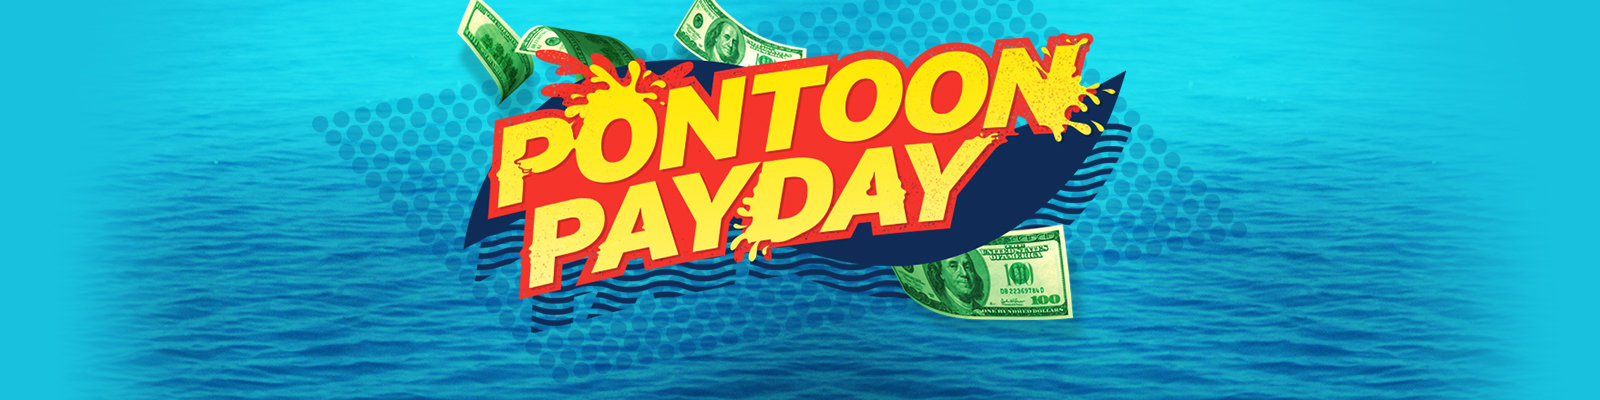 When Does Pontoon Payday Season 2 Start? Premiere Date